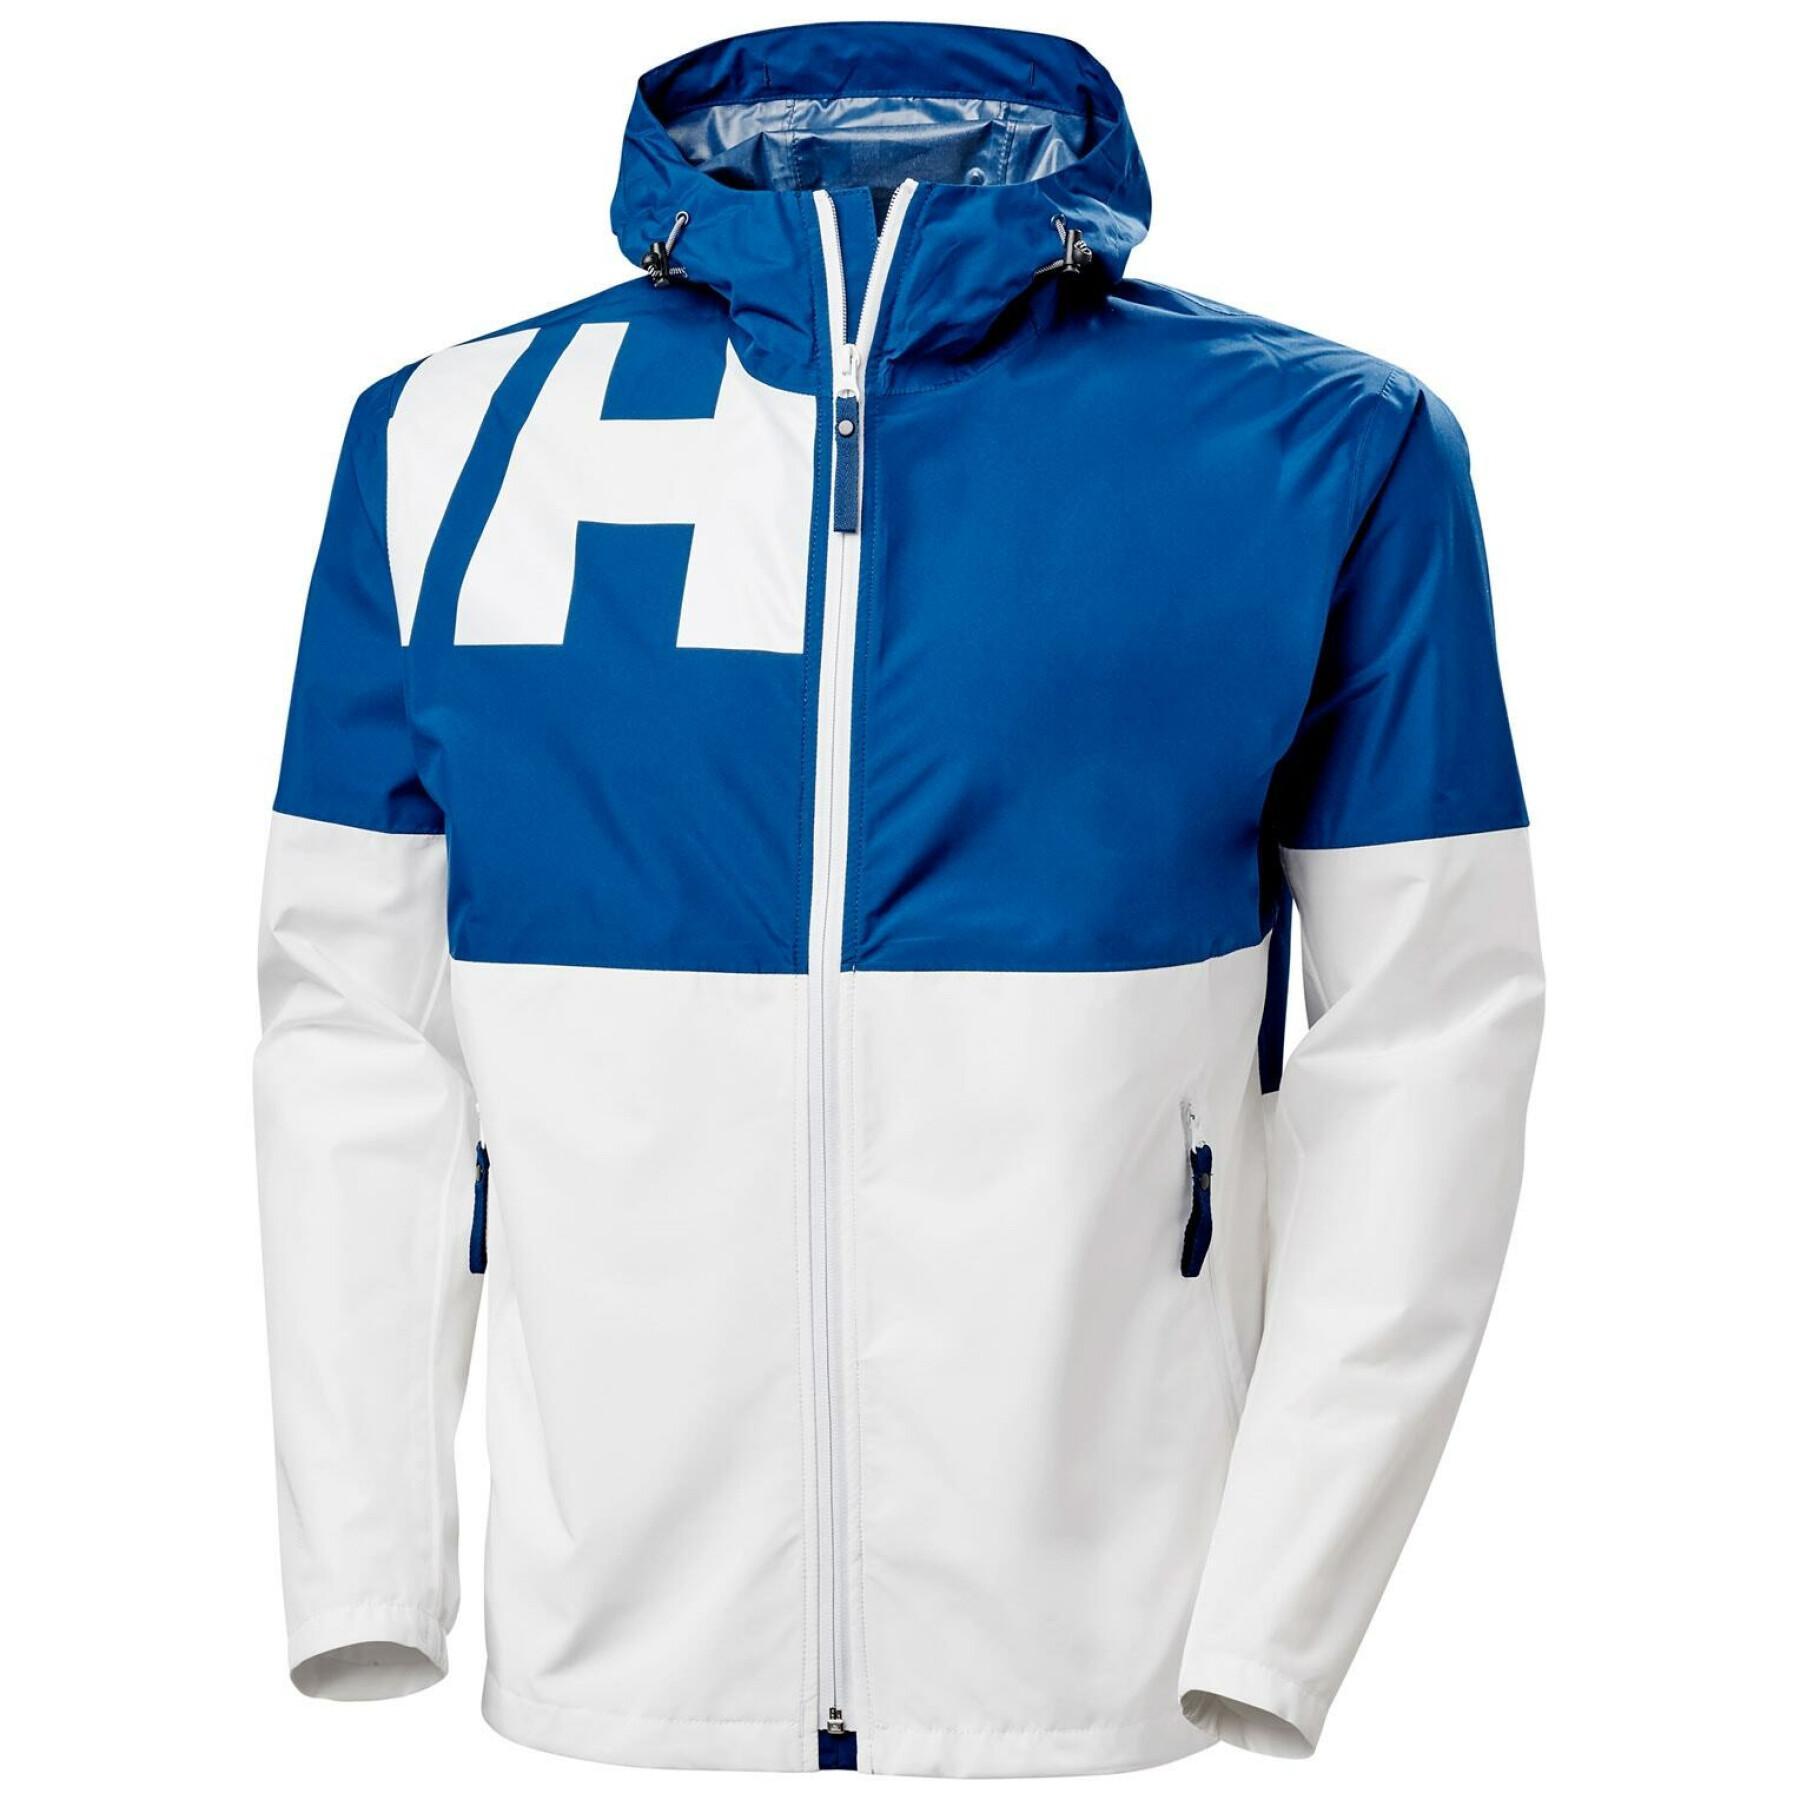 Waterproof jacket Helly Hansen Pursuit